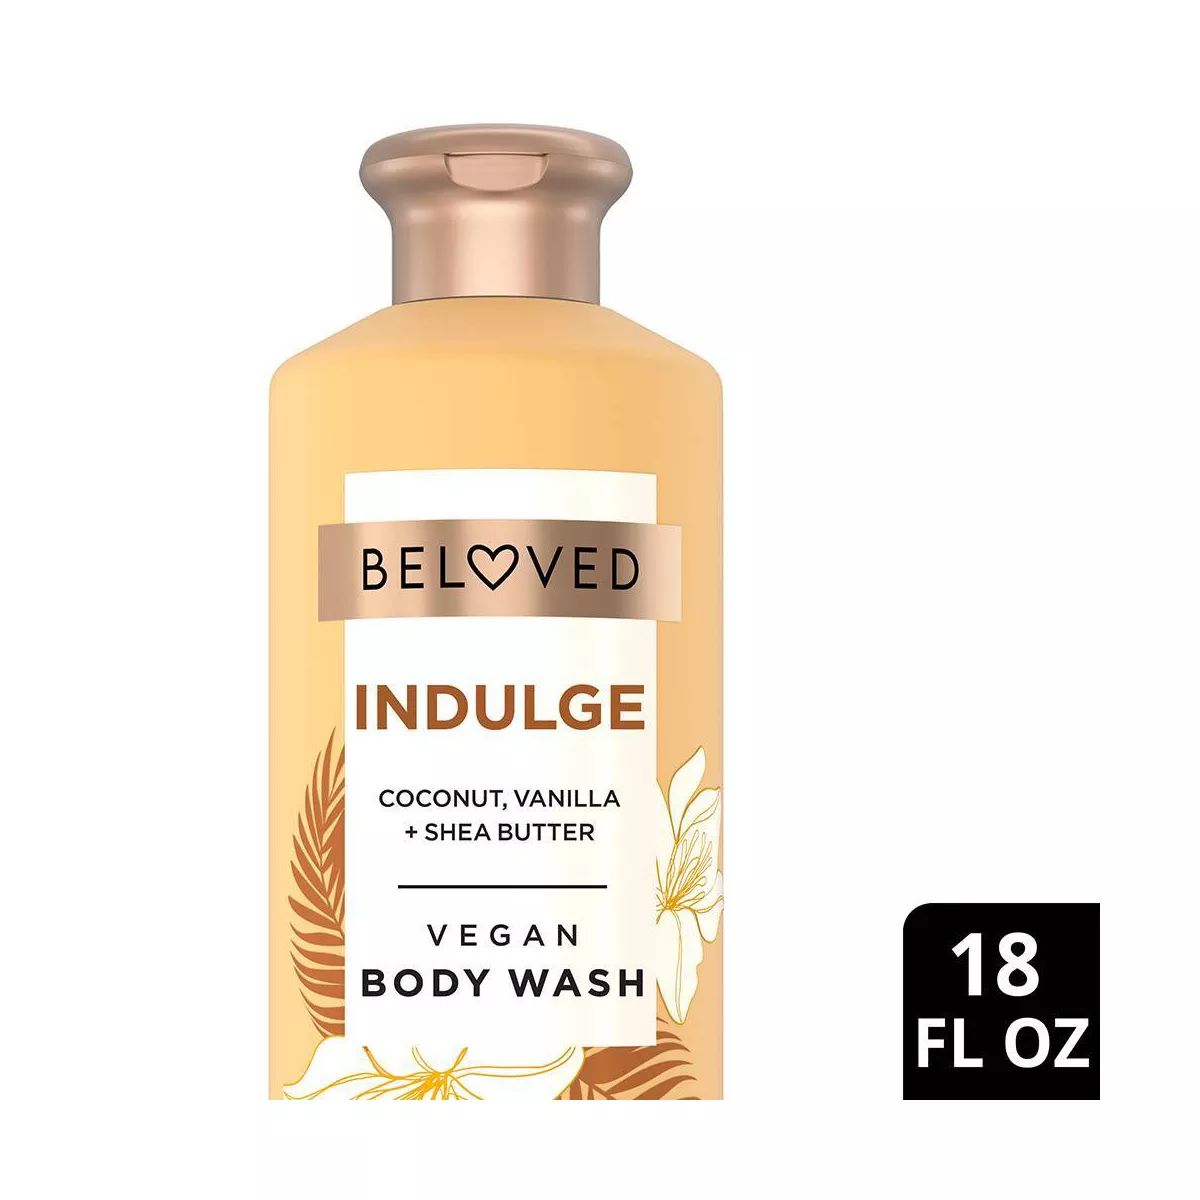 Beloved Indulge Vegan Body Wash with Coconut, Vanilla & Shea Butter - 18 fl oz | Target